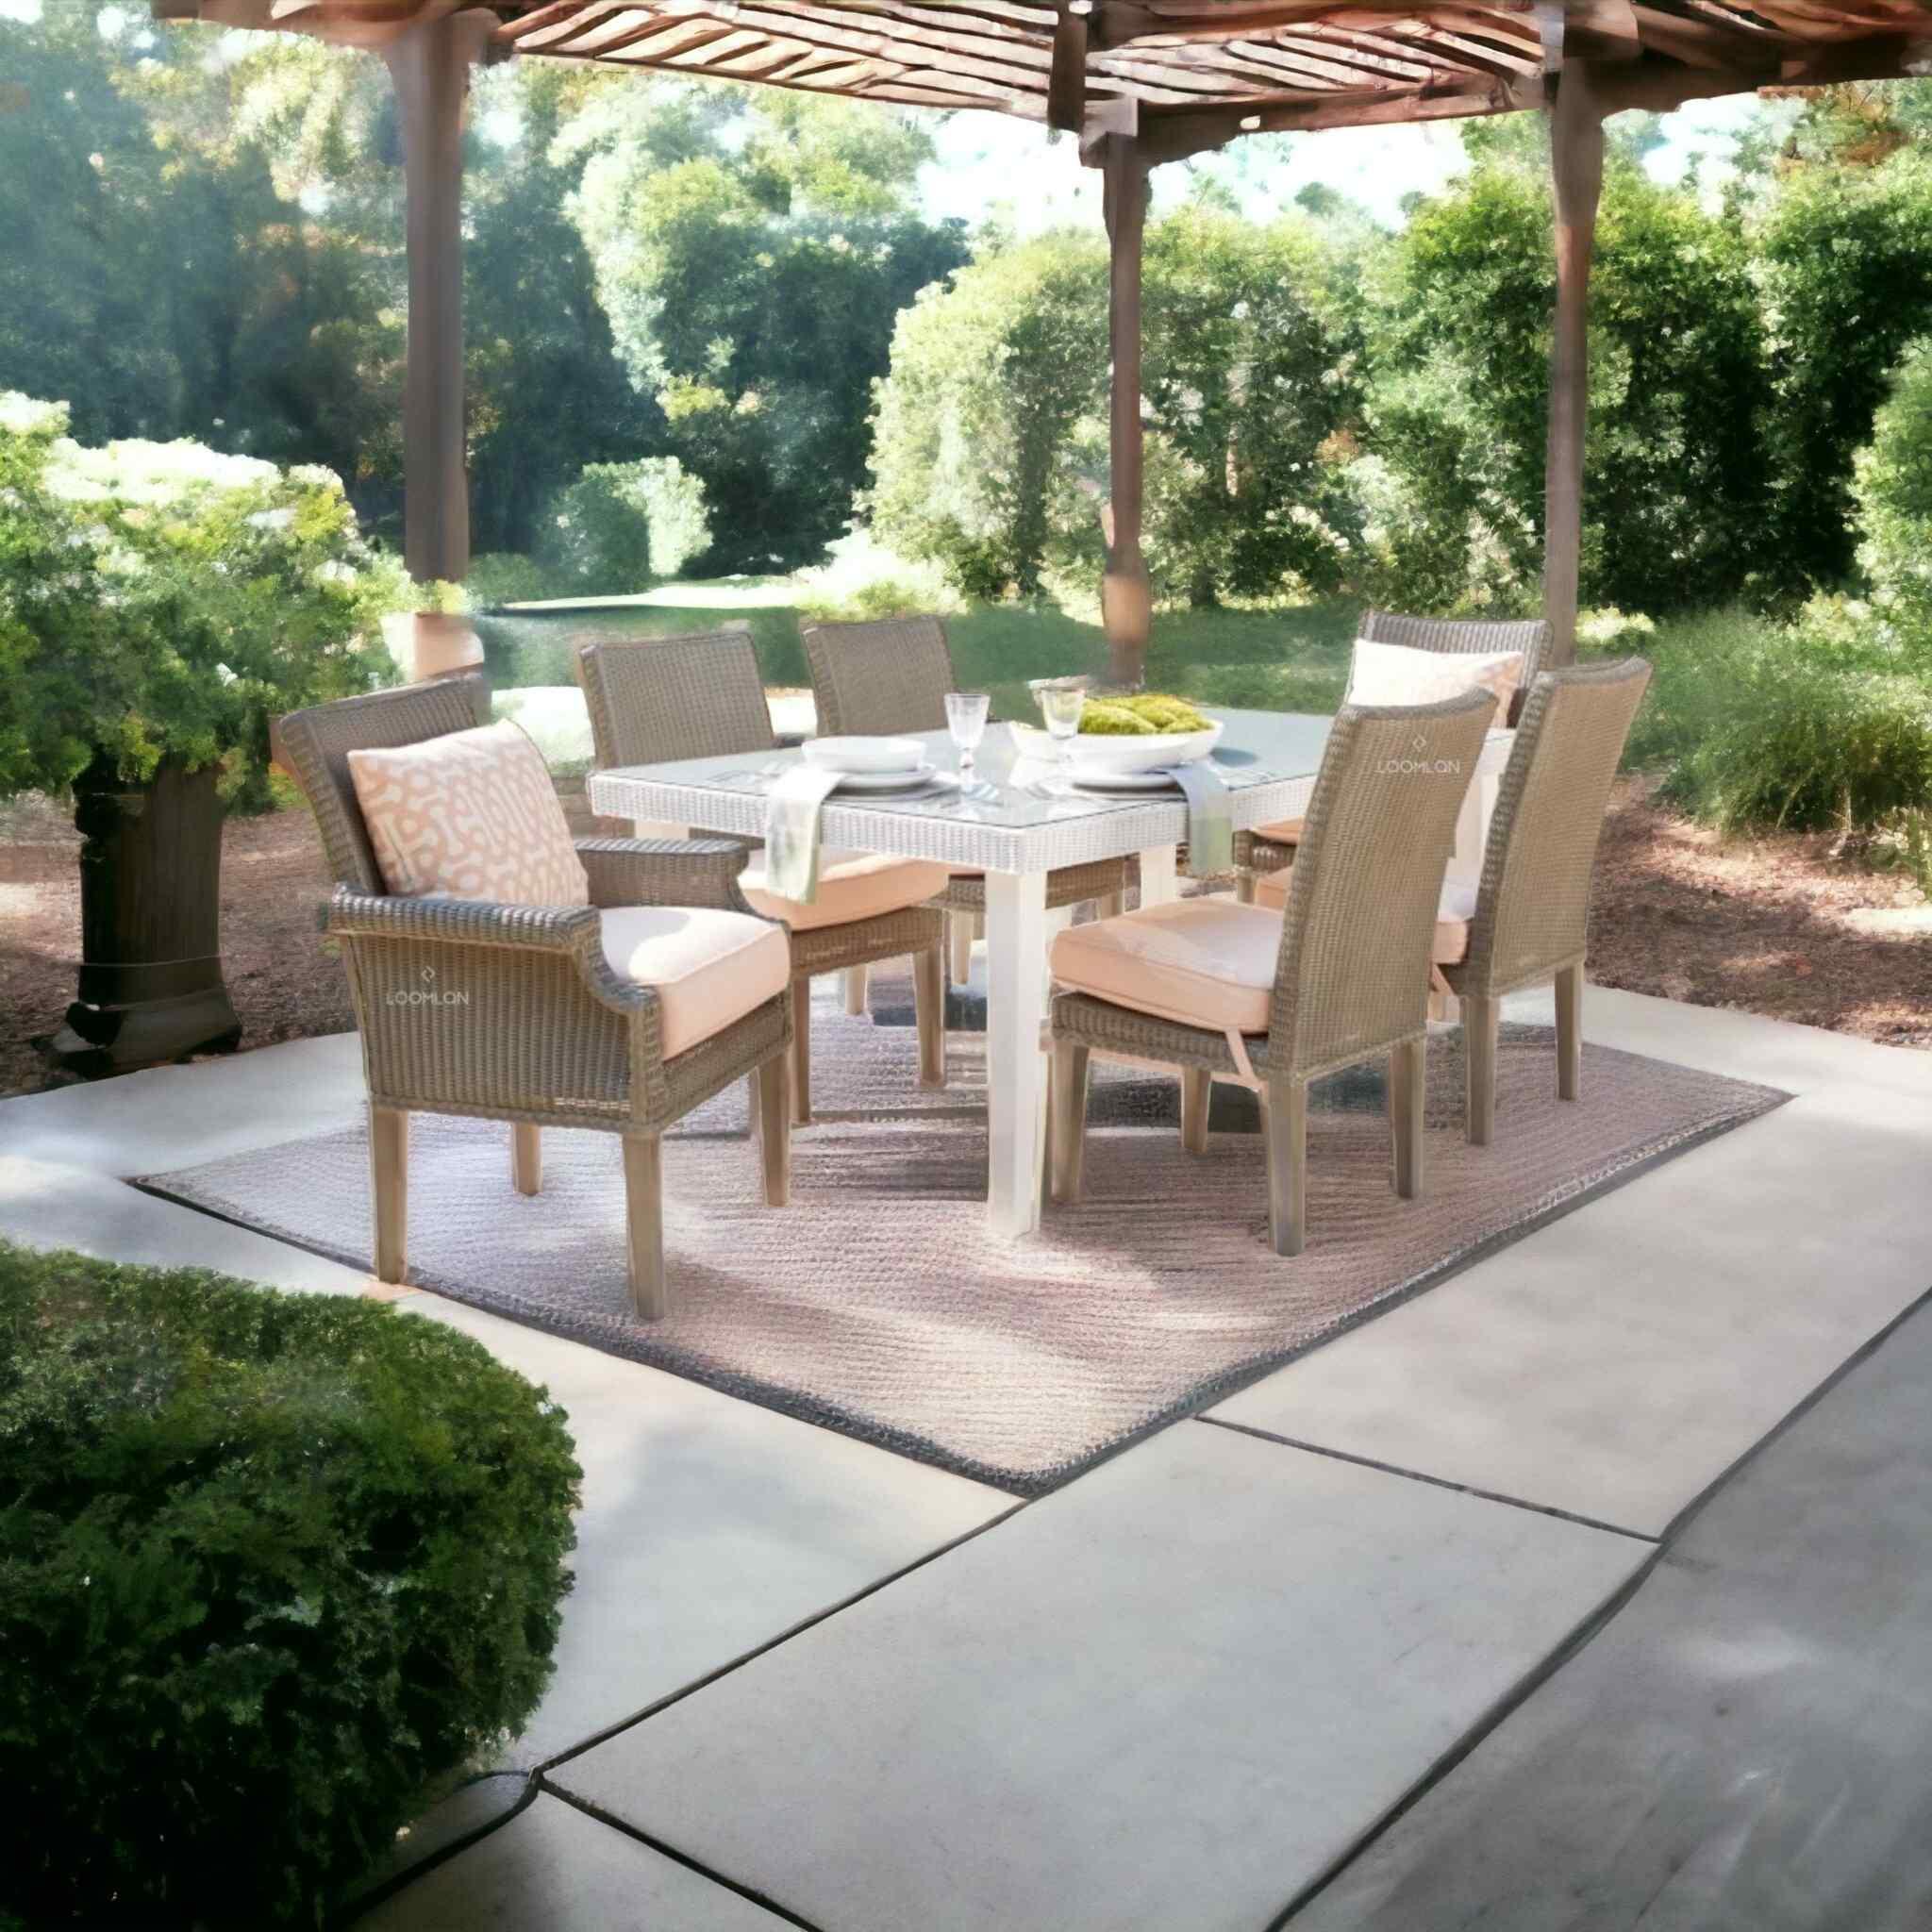 LOOMLAN Outdoor - Hamptons Outdoor Wicker Dining Table Set for 6 Lloyd Flanders Lloyd Flanders - Outdoor Dining Sets